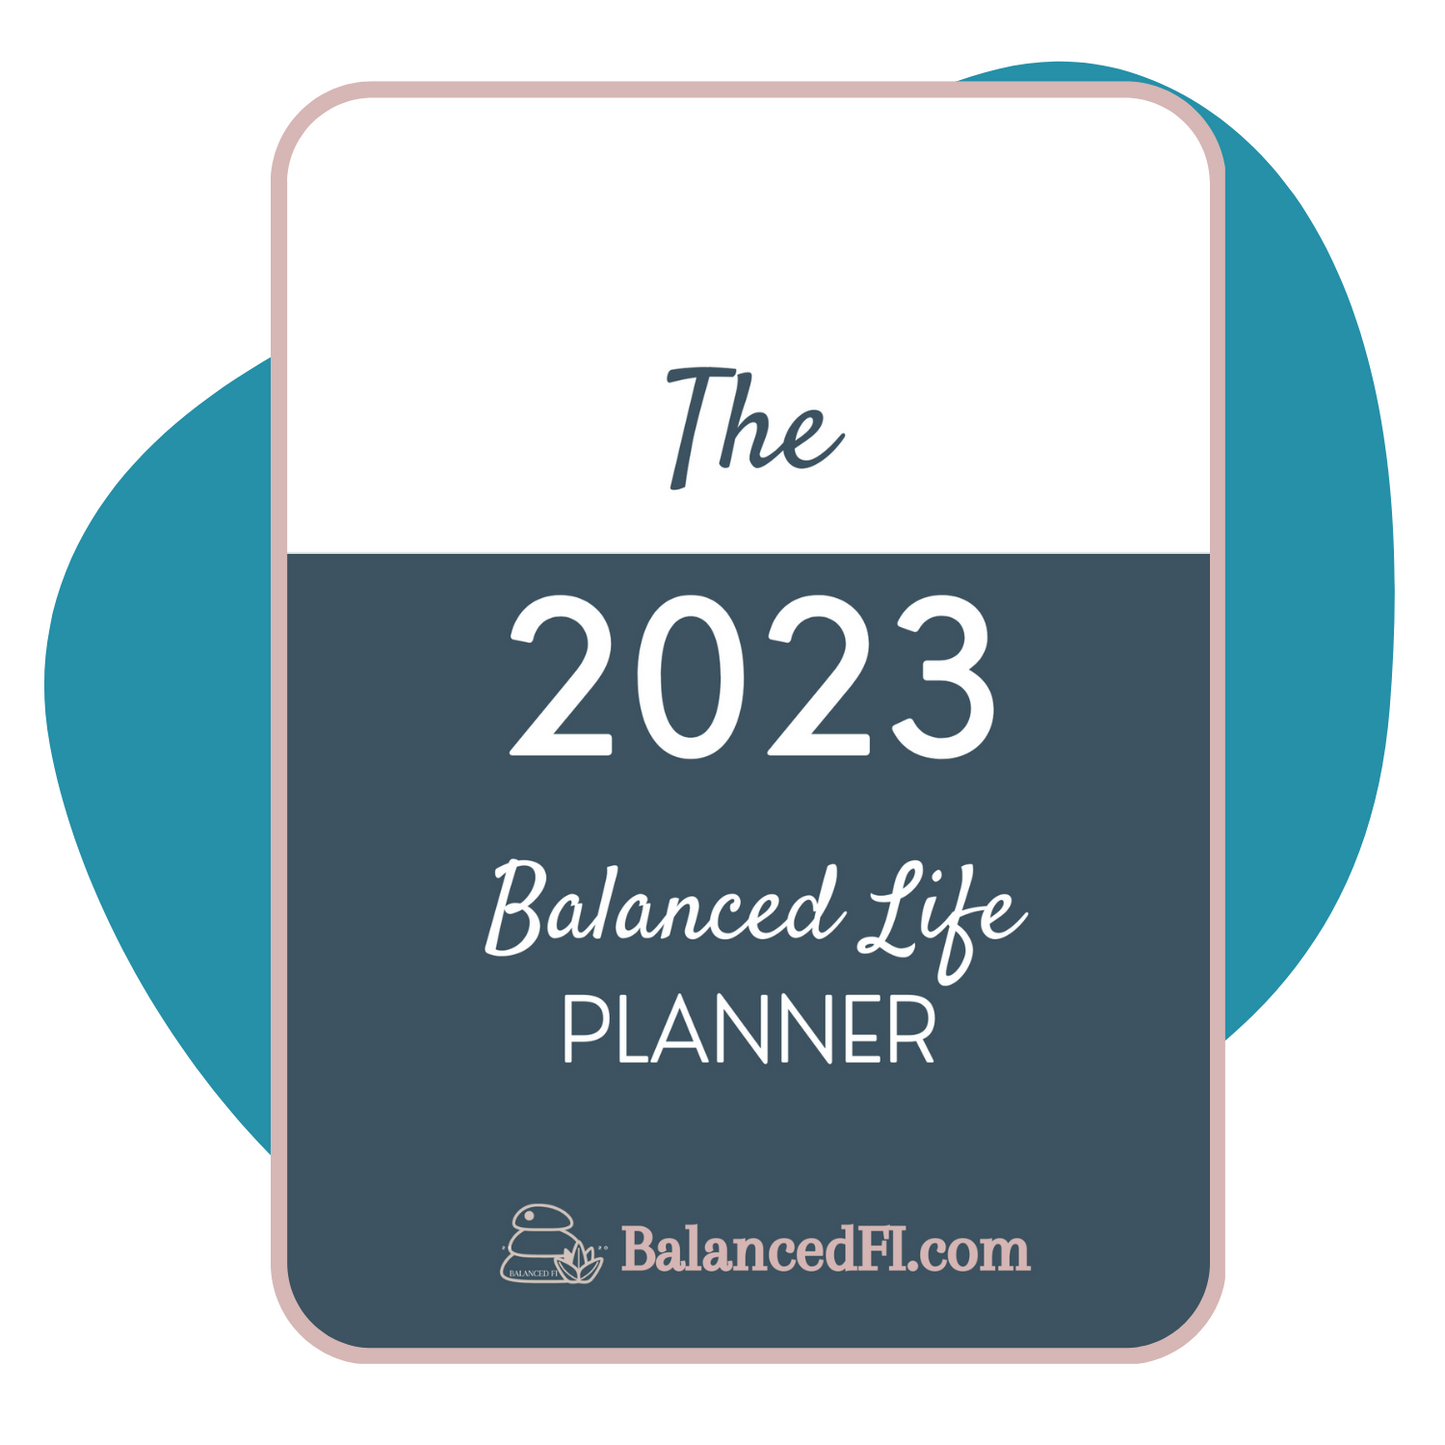 2023 Balanced Life Planner